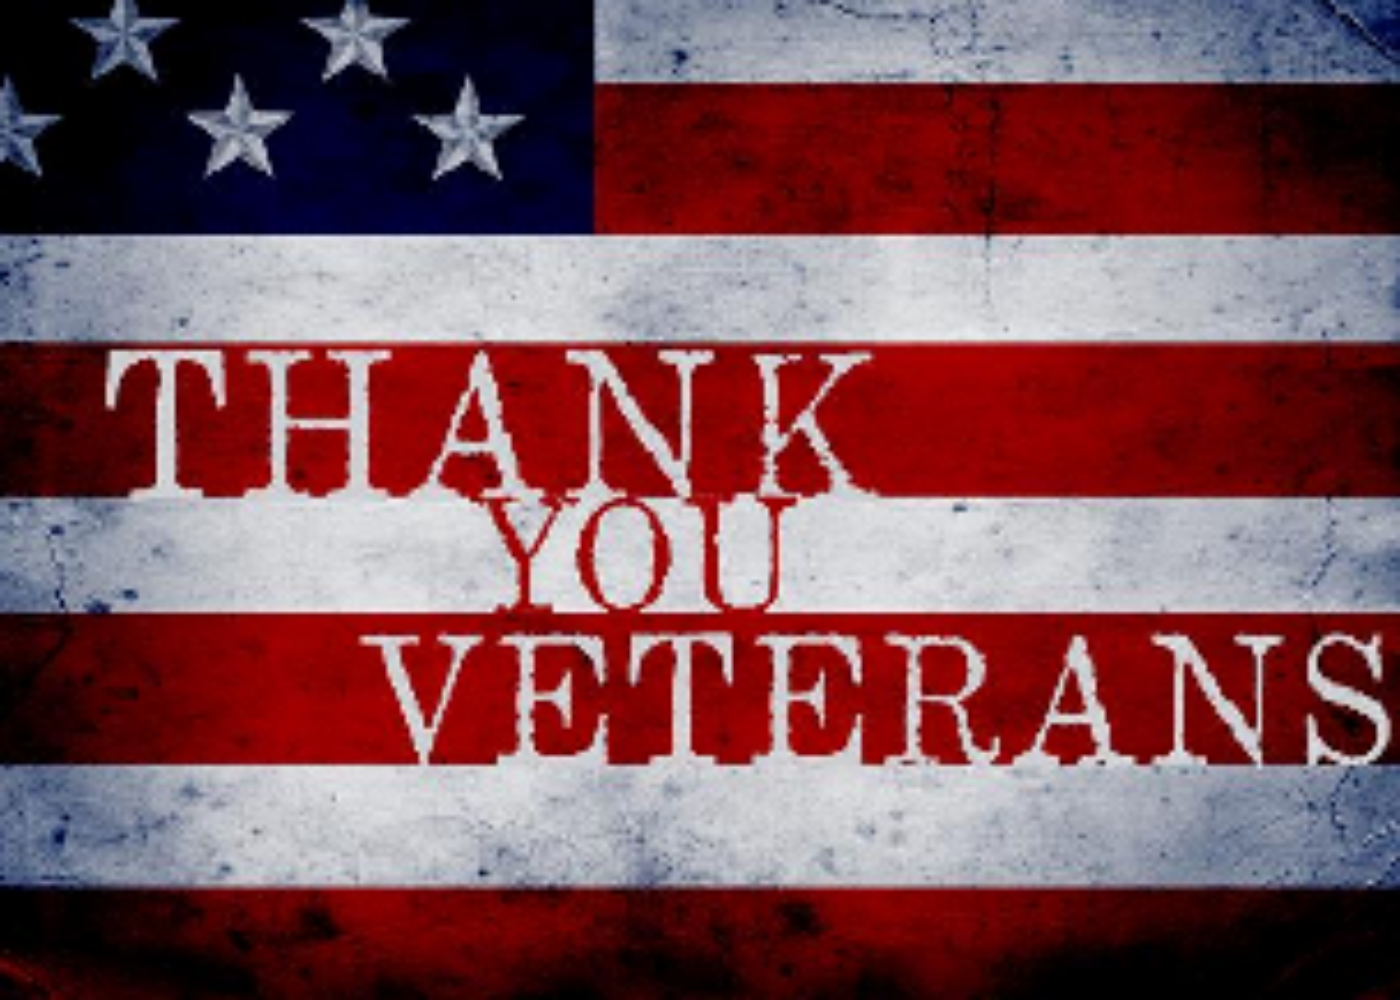 thank_you_veterans_